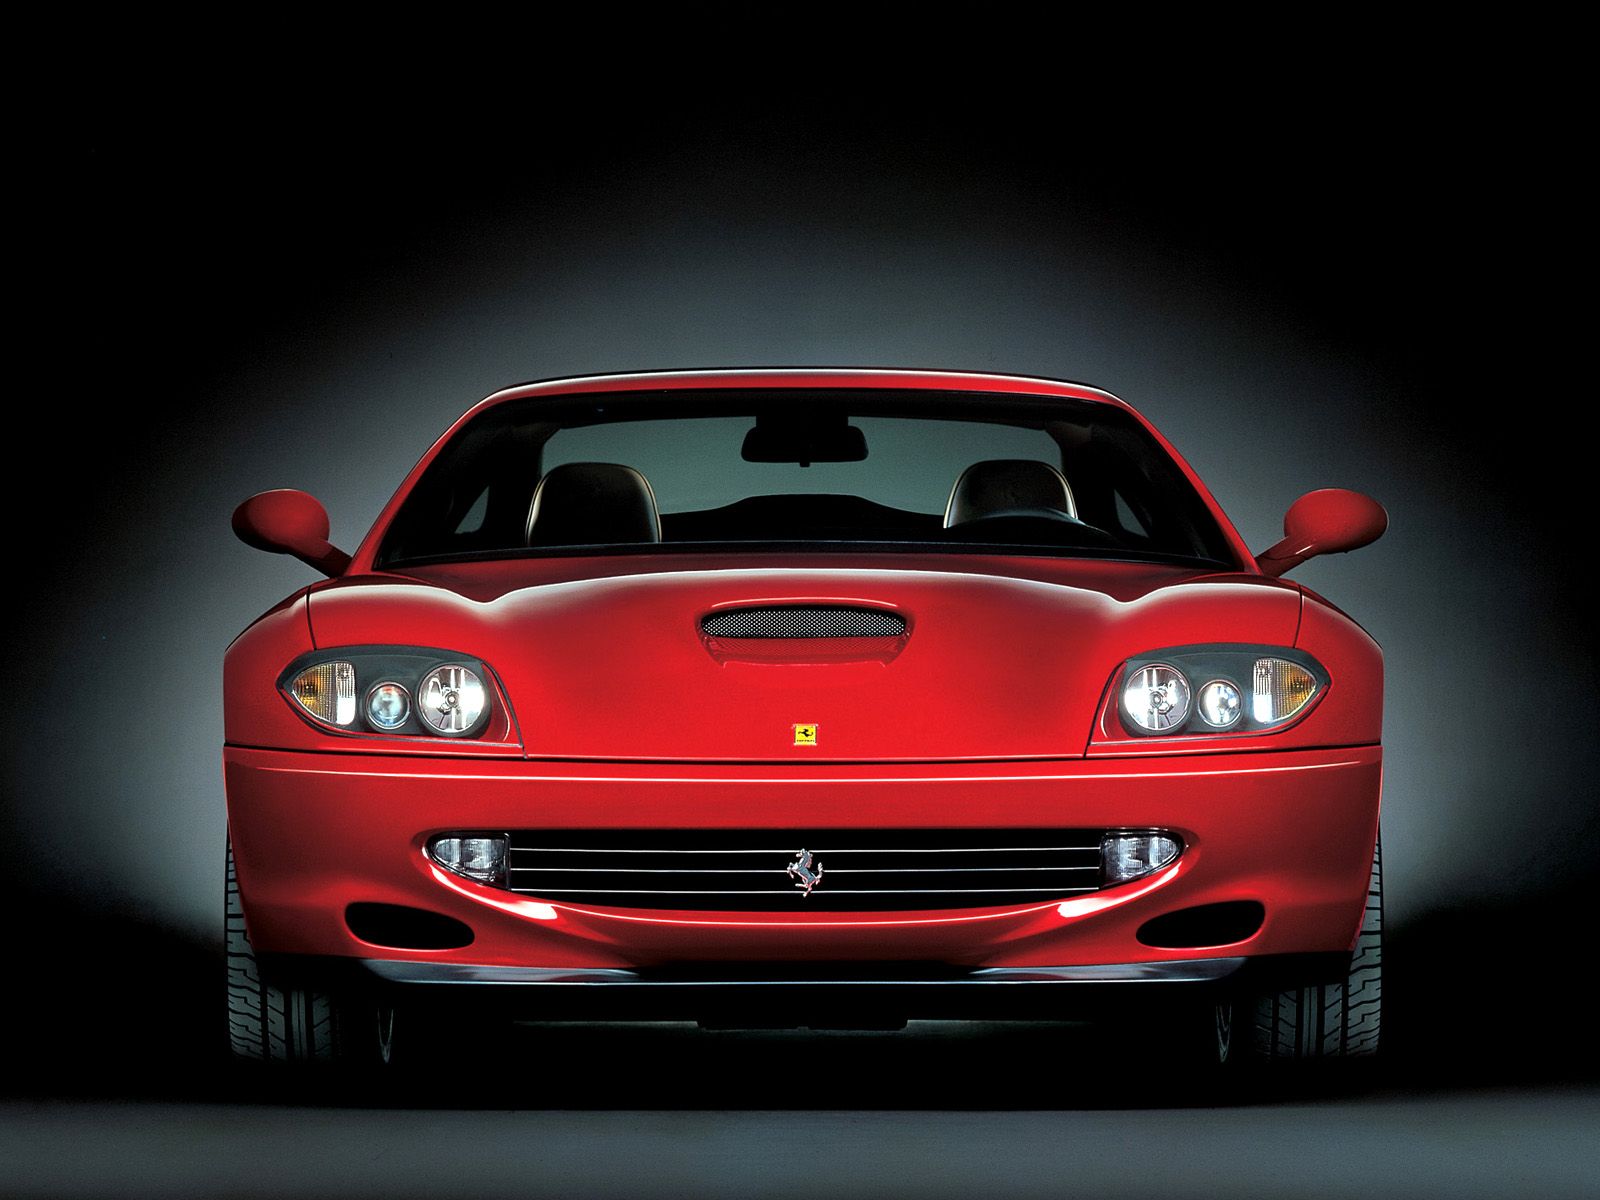 Ferrari 550 Maranello Reviews - Cars | dooyoo.